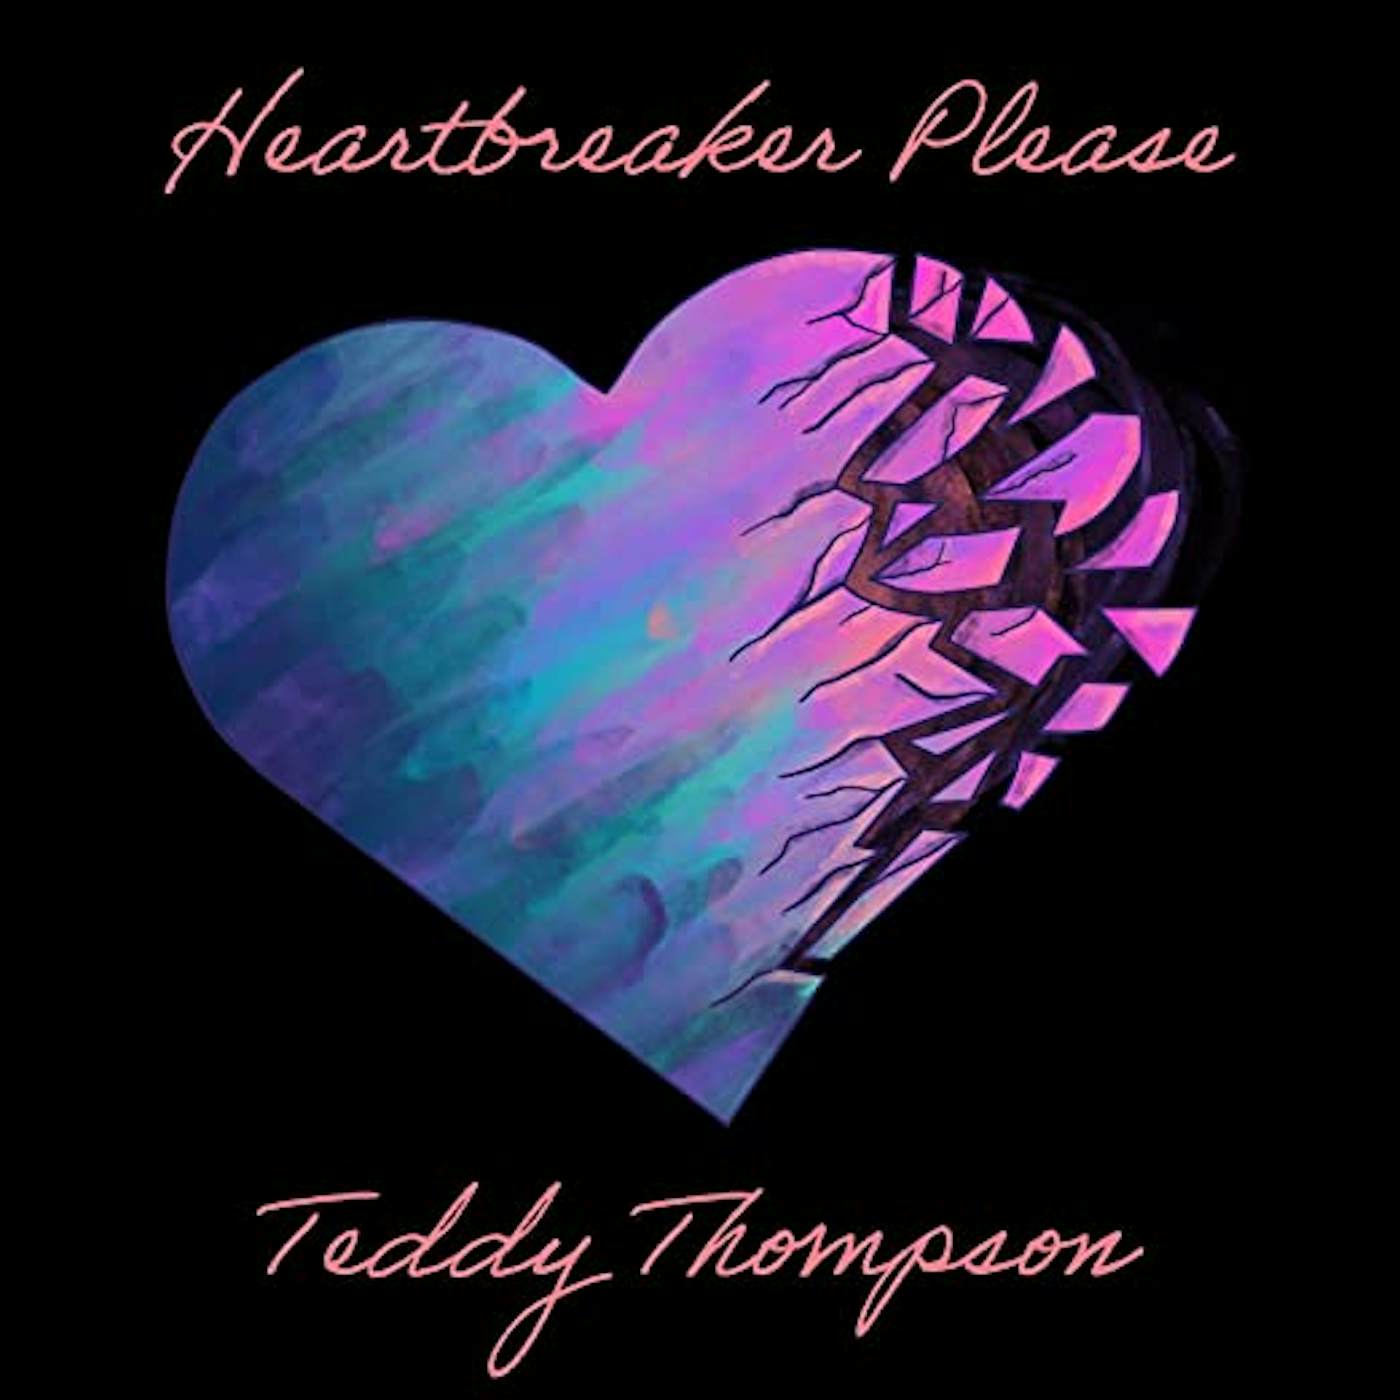 Teddy Thompson Heartbreaker Please Vinyl Record